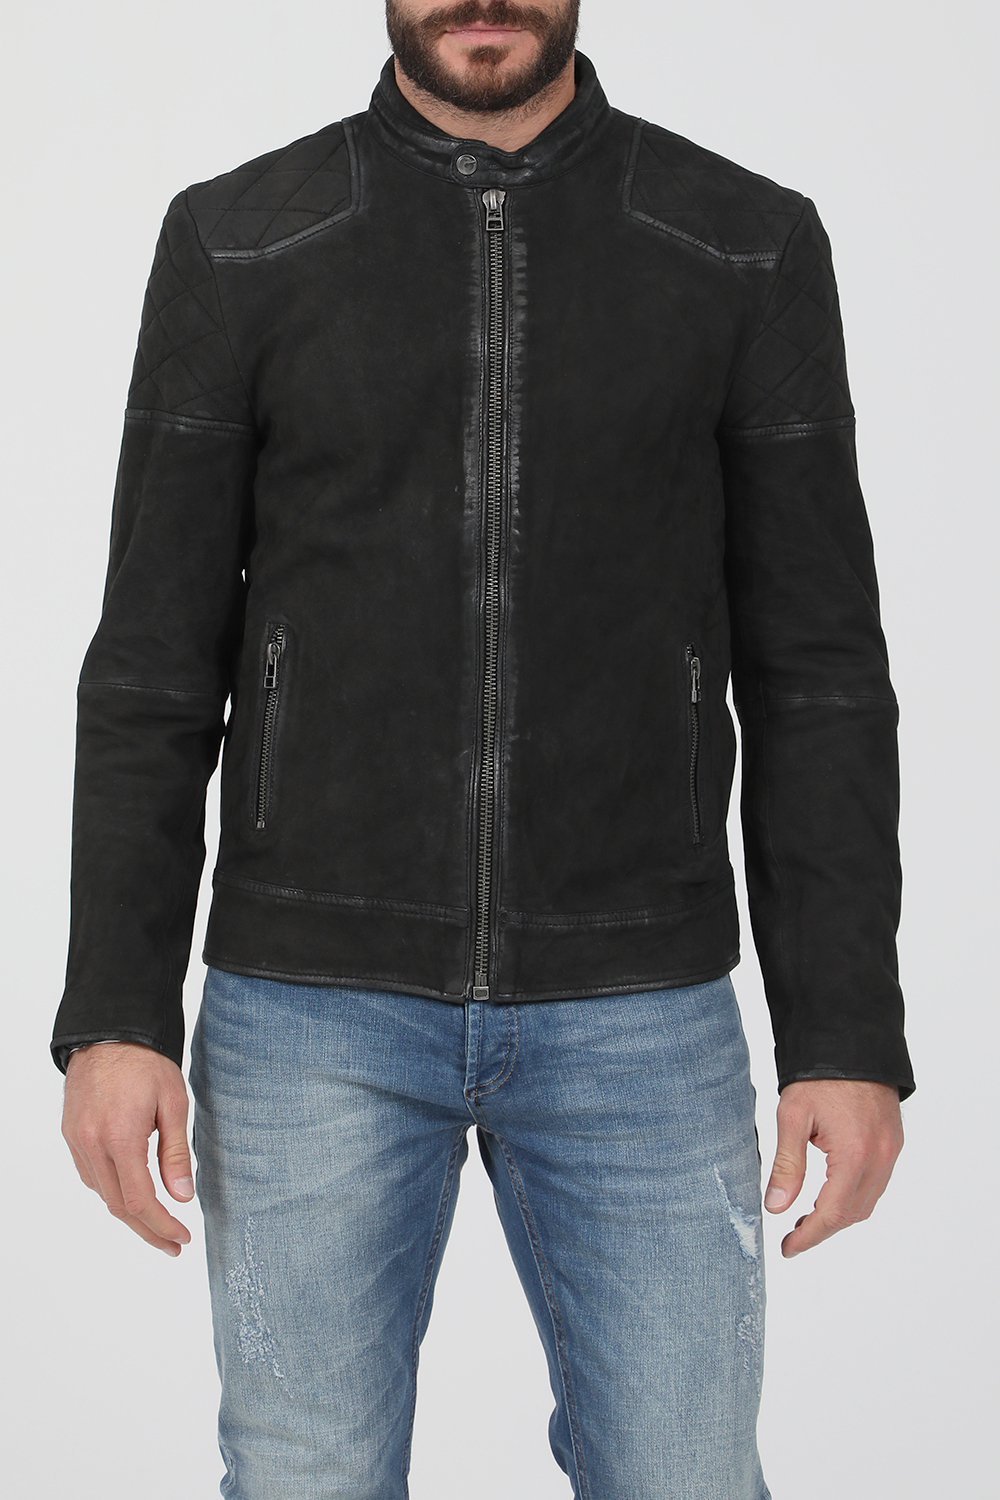 GOOSECRAFT – Ανδρικό δερμάτινο jacket GOOSECRAFT GC BRENTWOOD BIKER μαύρο 1822714.0-0072